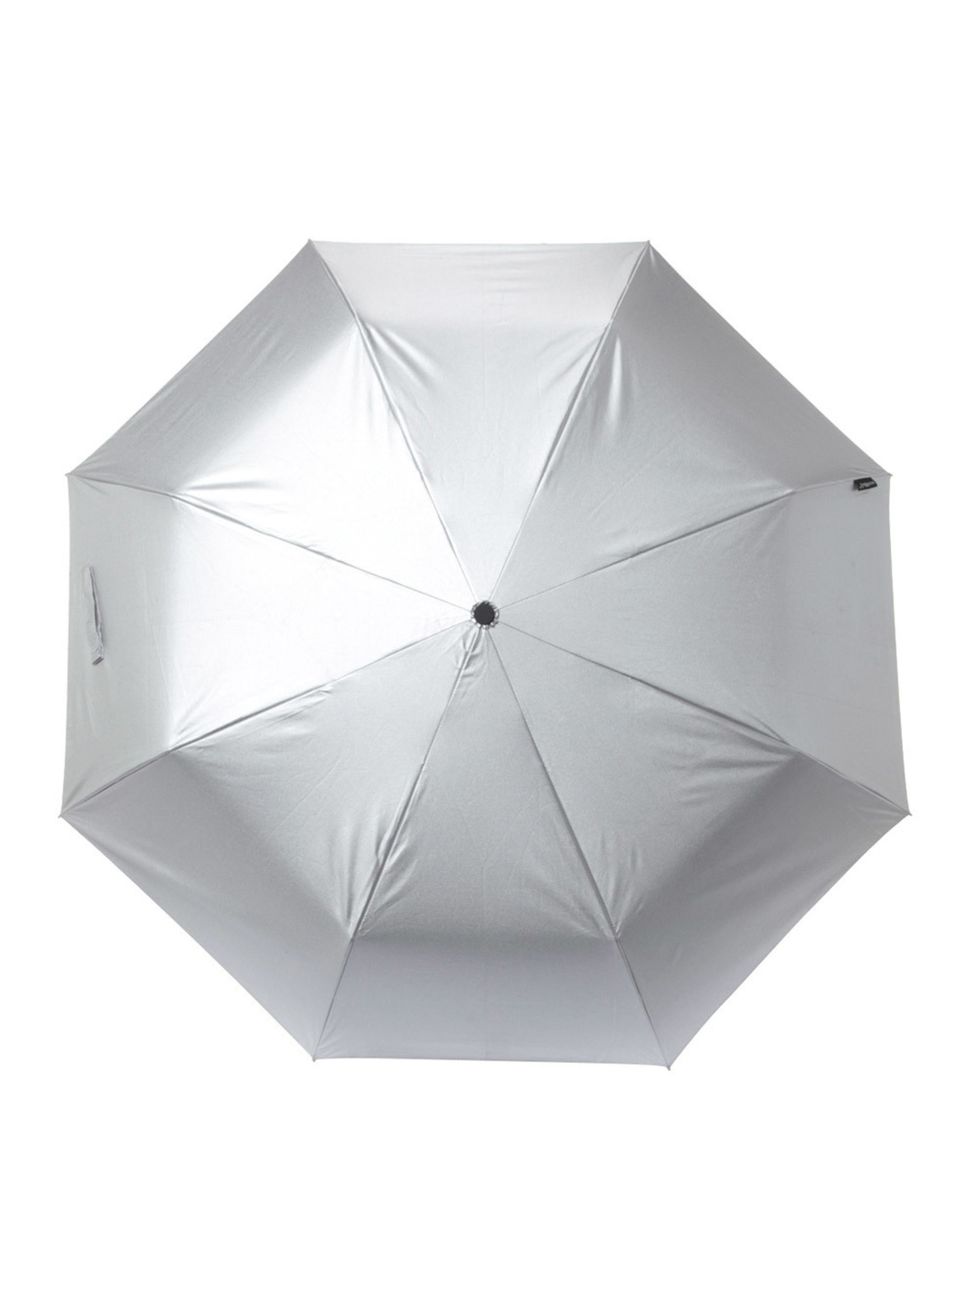 Umbrella, Material property, Metal, Symmetry, Silver, Creative arts, Craft, 